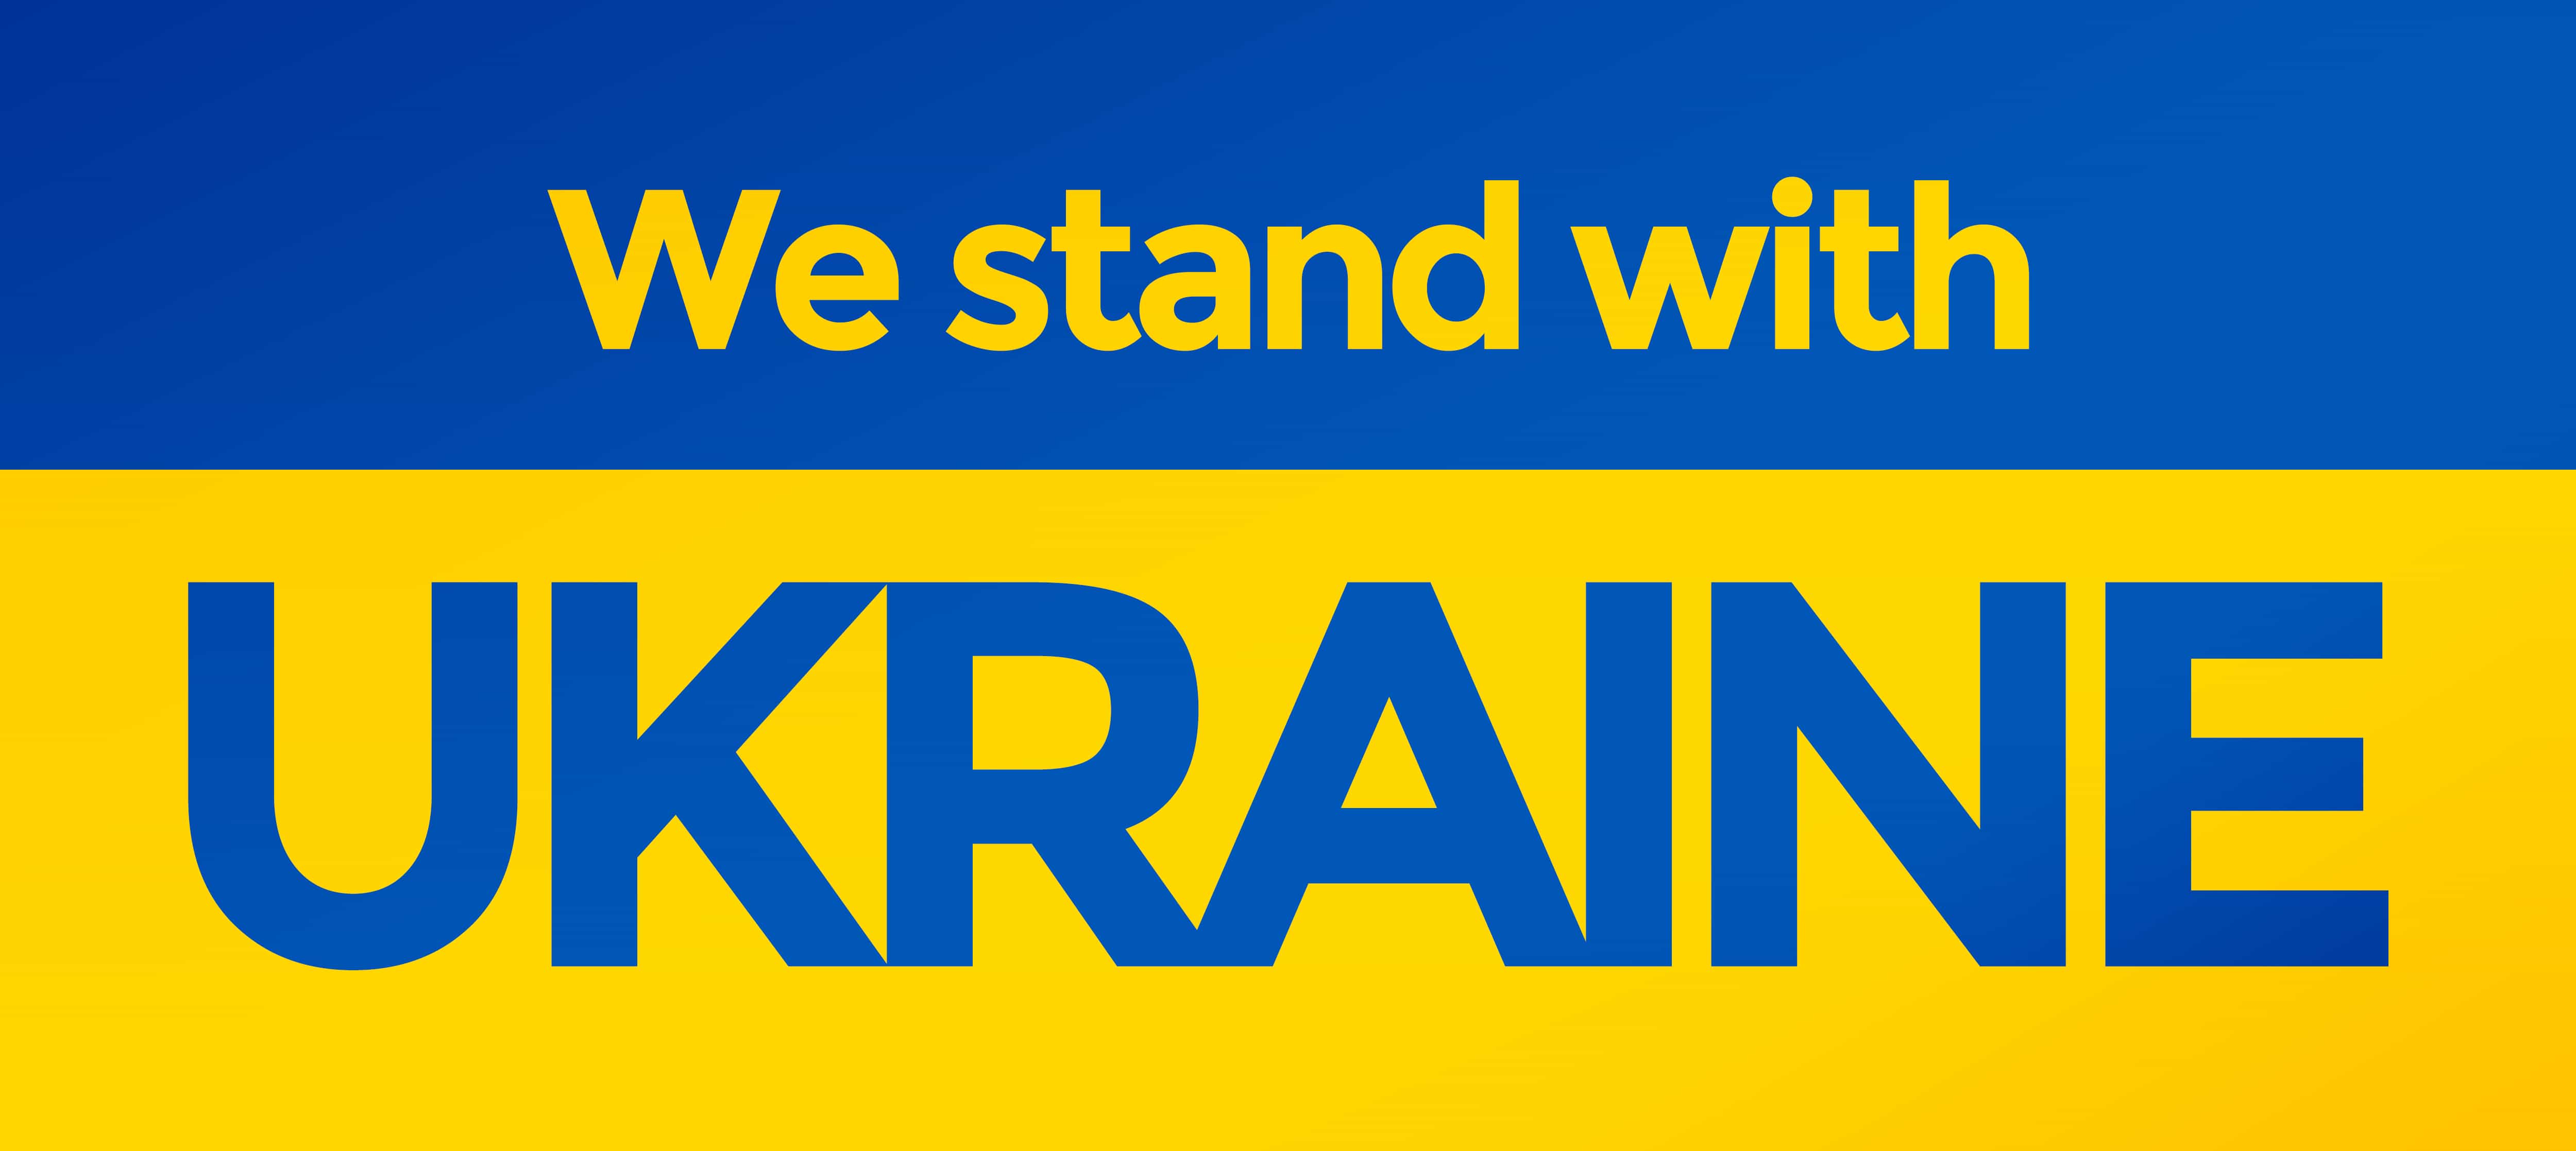 We stand with Ukraine background